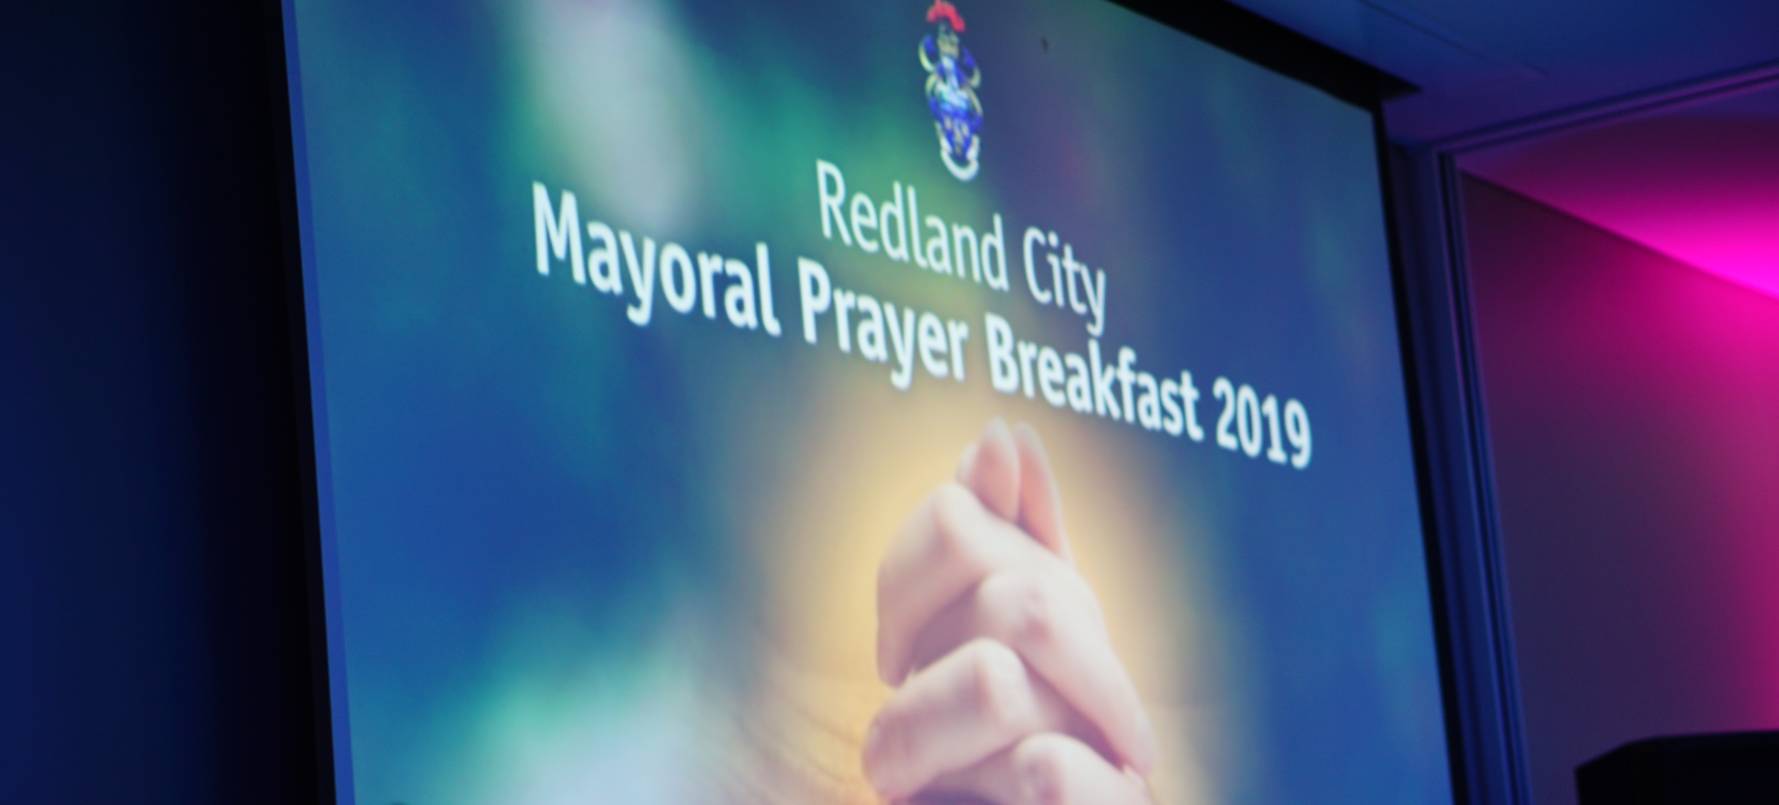 2019 Mayoral Prayer Breakfast